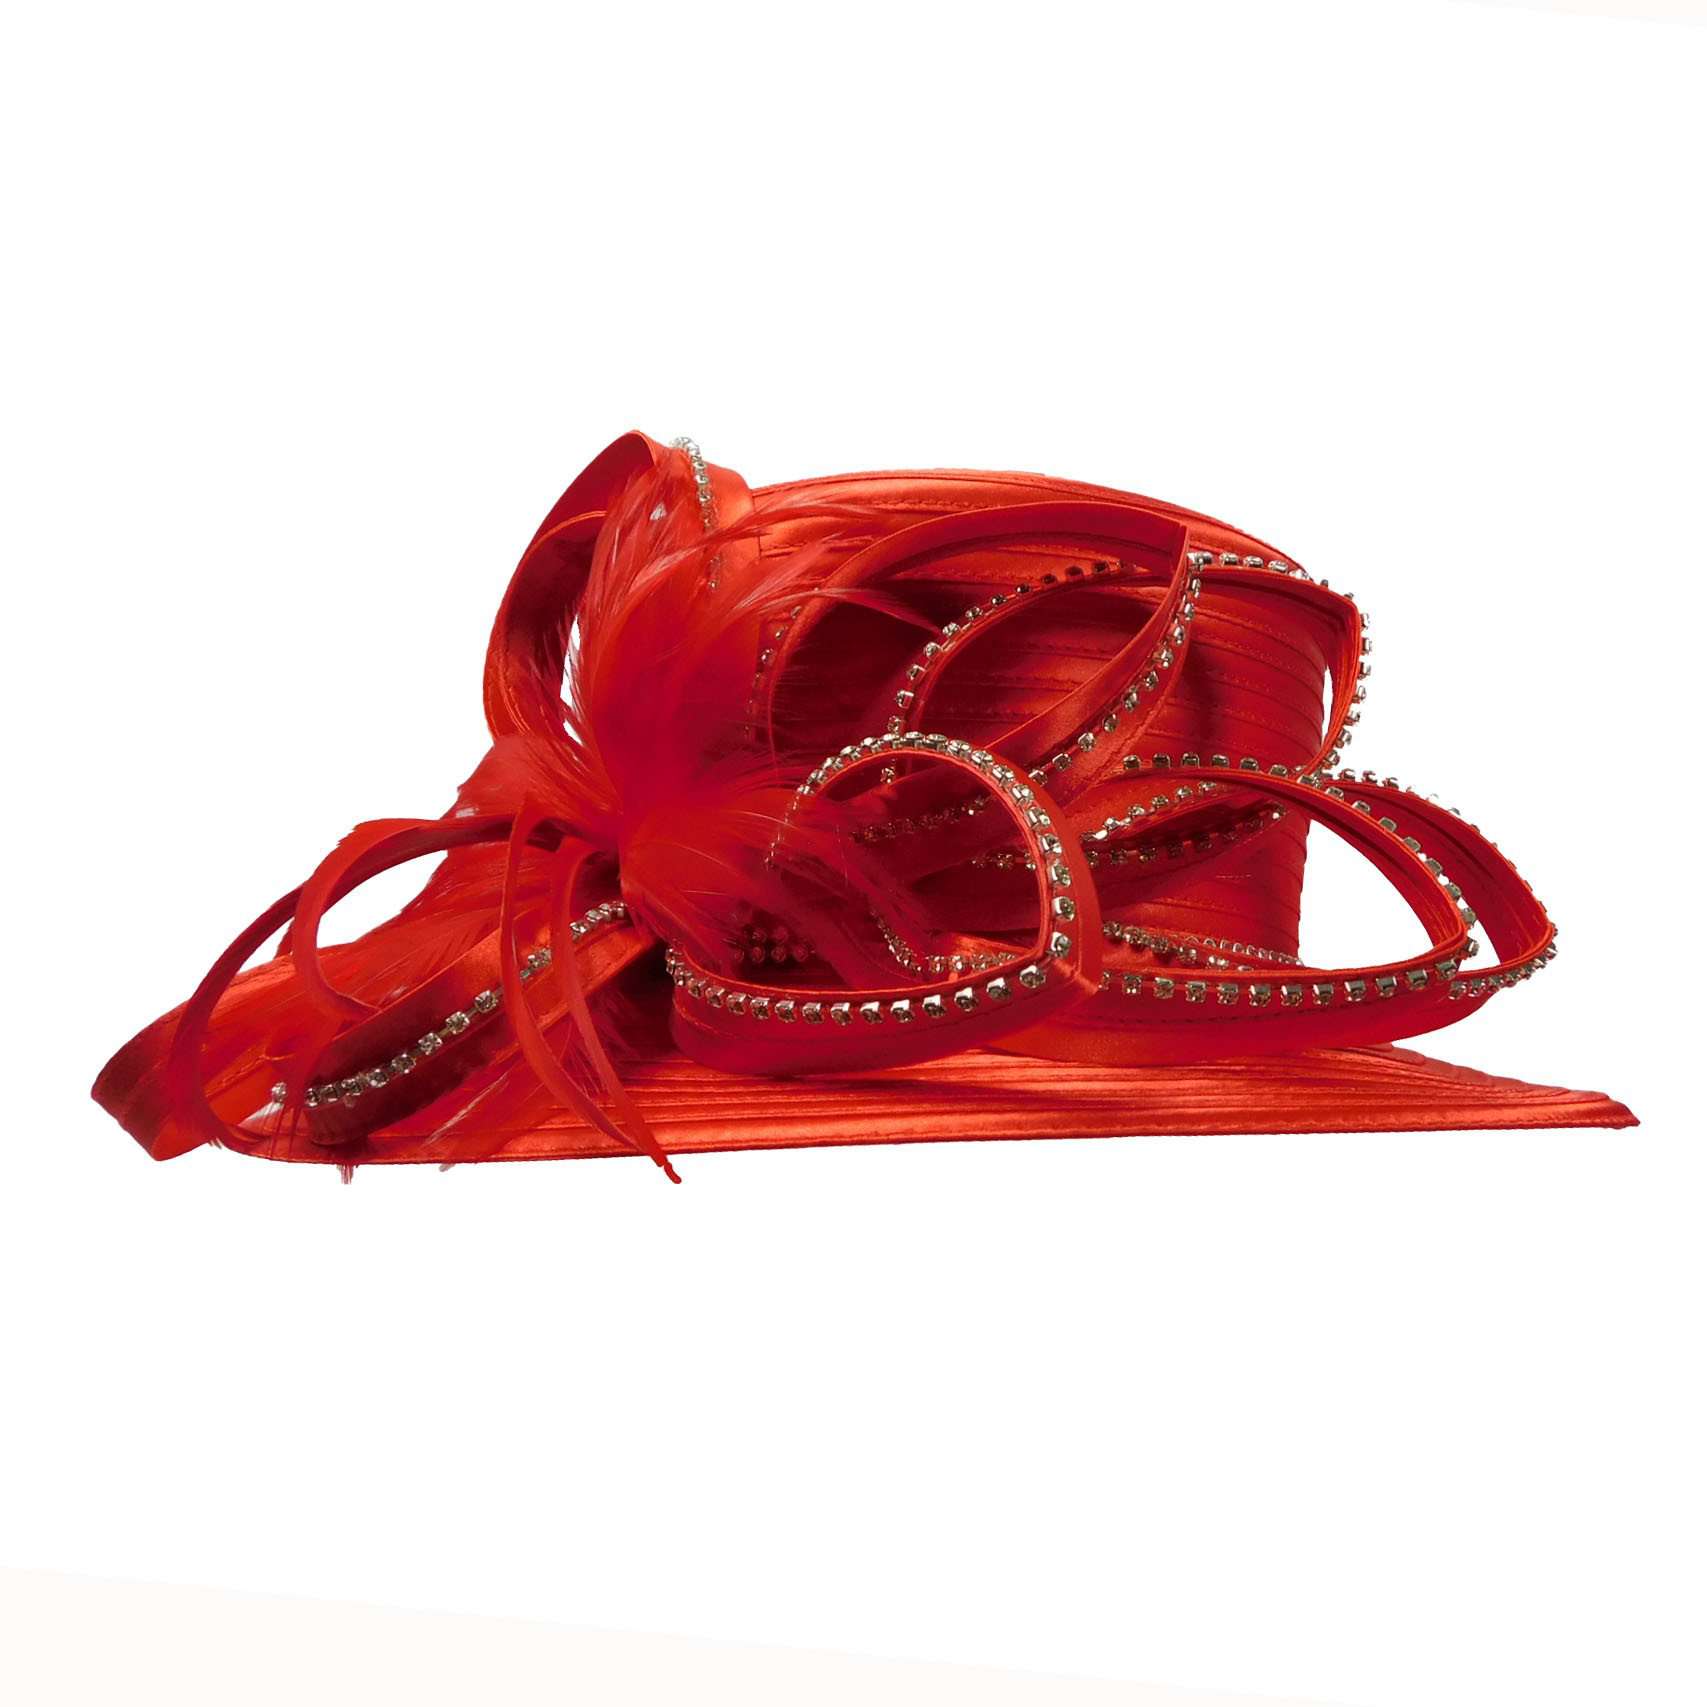 Satin Ribbon Dress Hat with Loopy Ribbon Accent, Dress Hat - SetarTrading Hats 